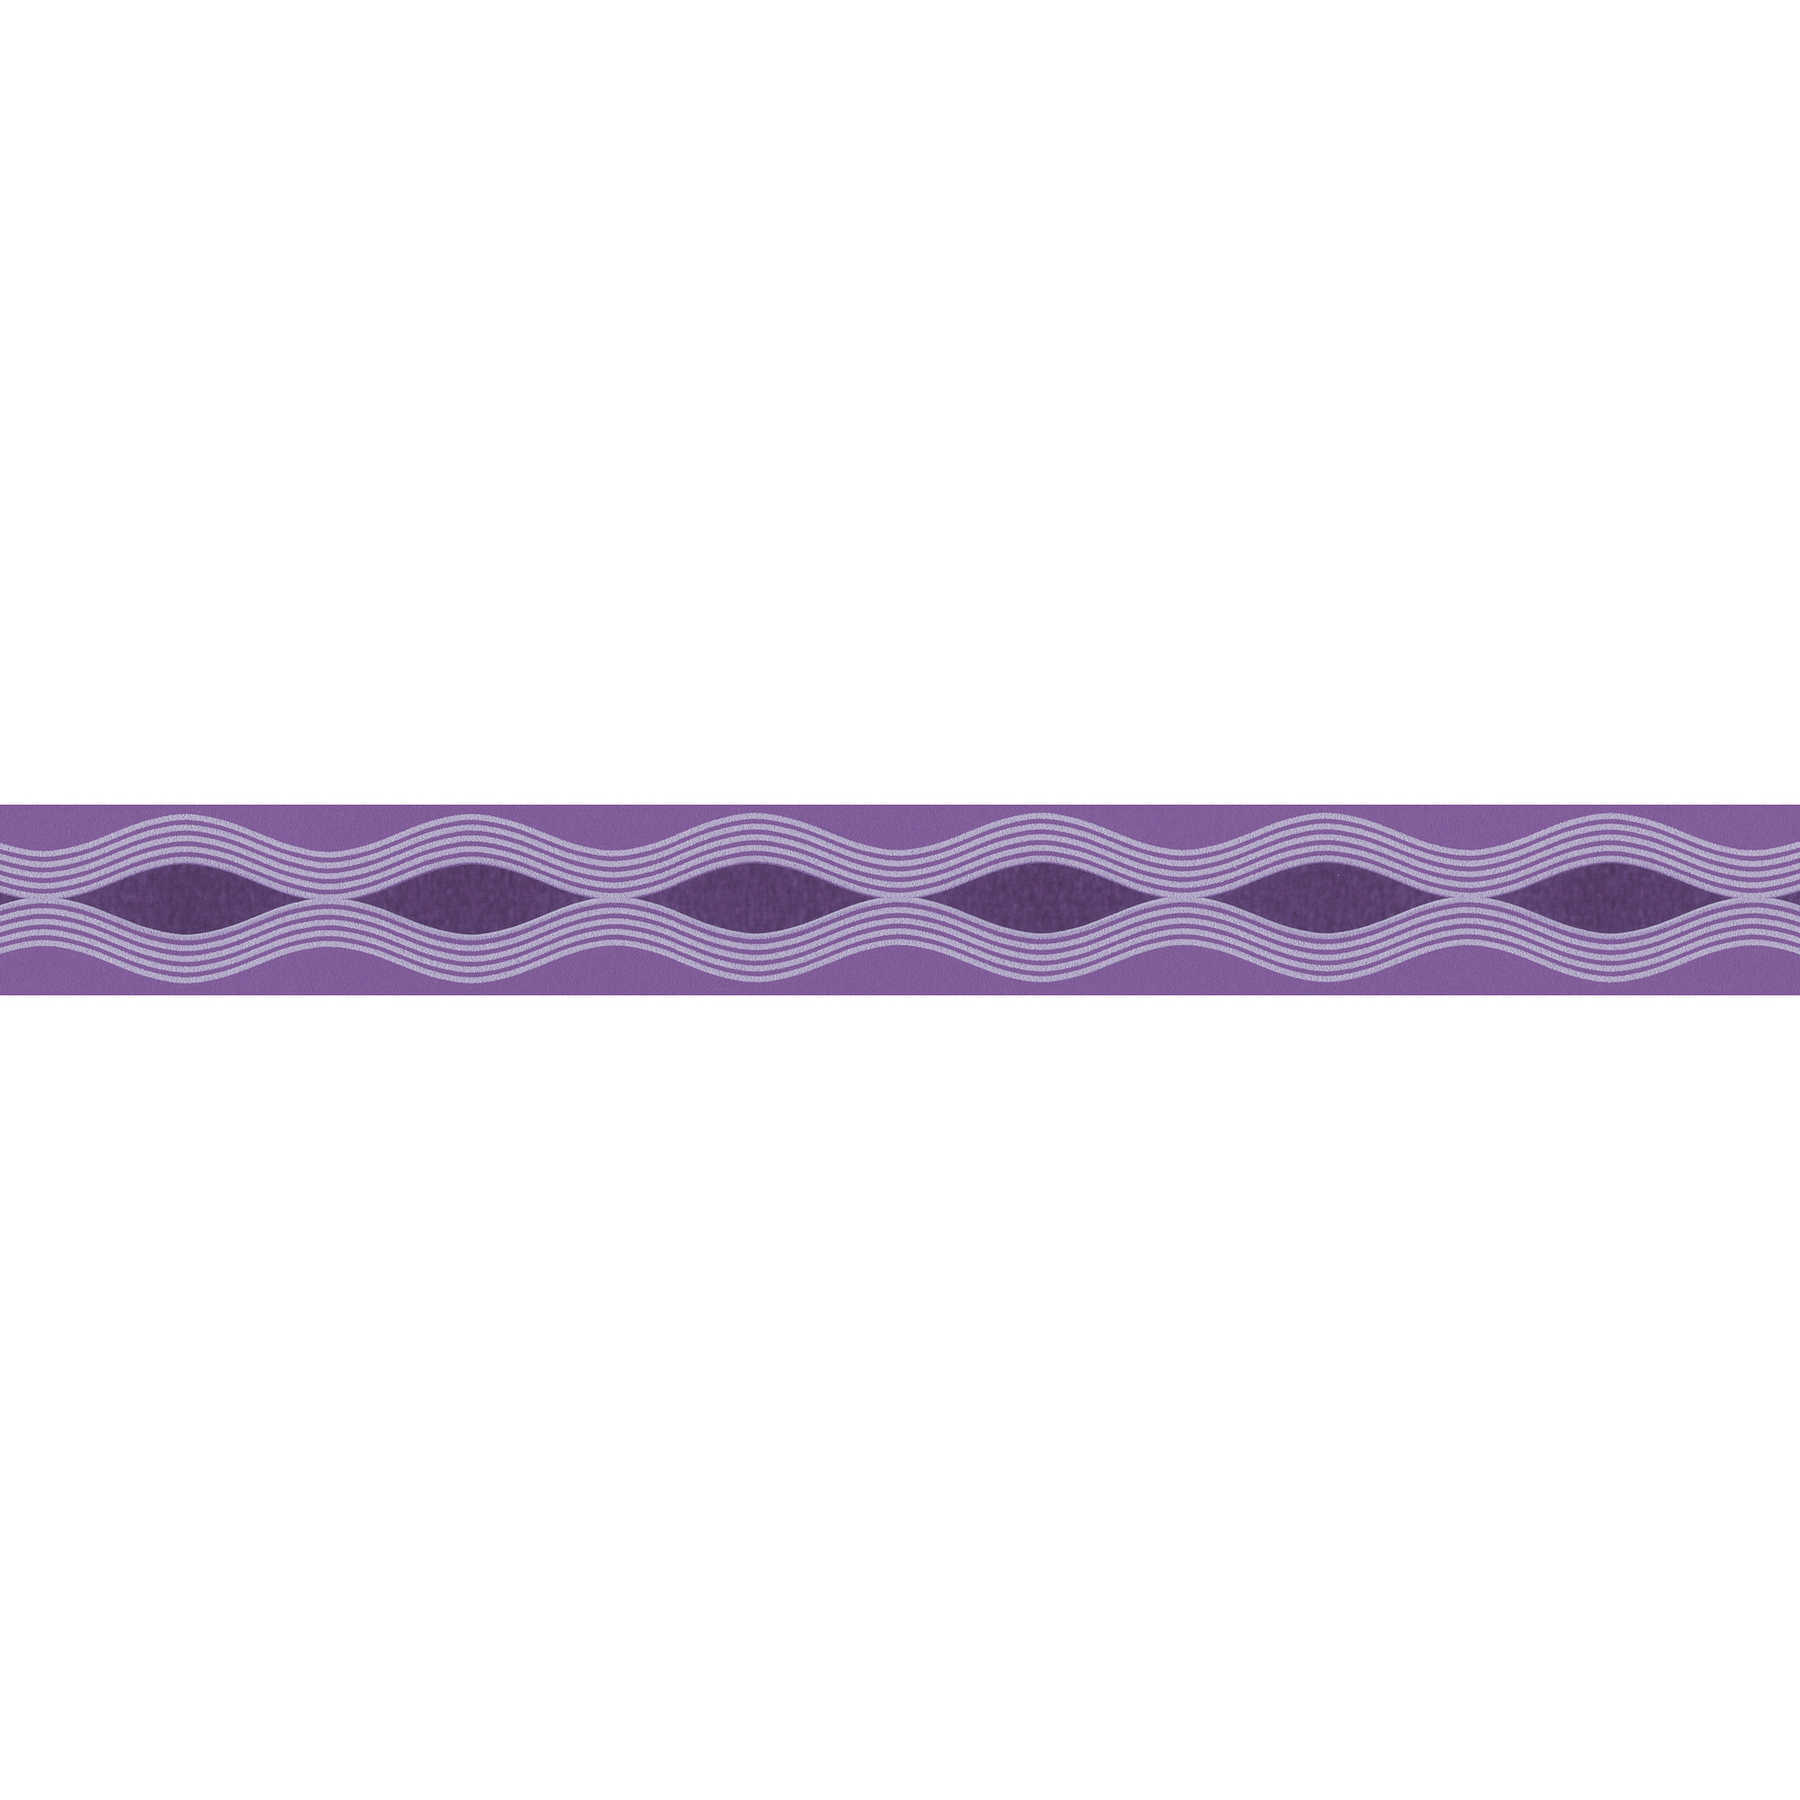         Purple border with graphic design and line pattern - Purple, White
    